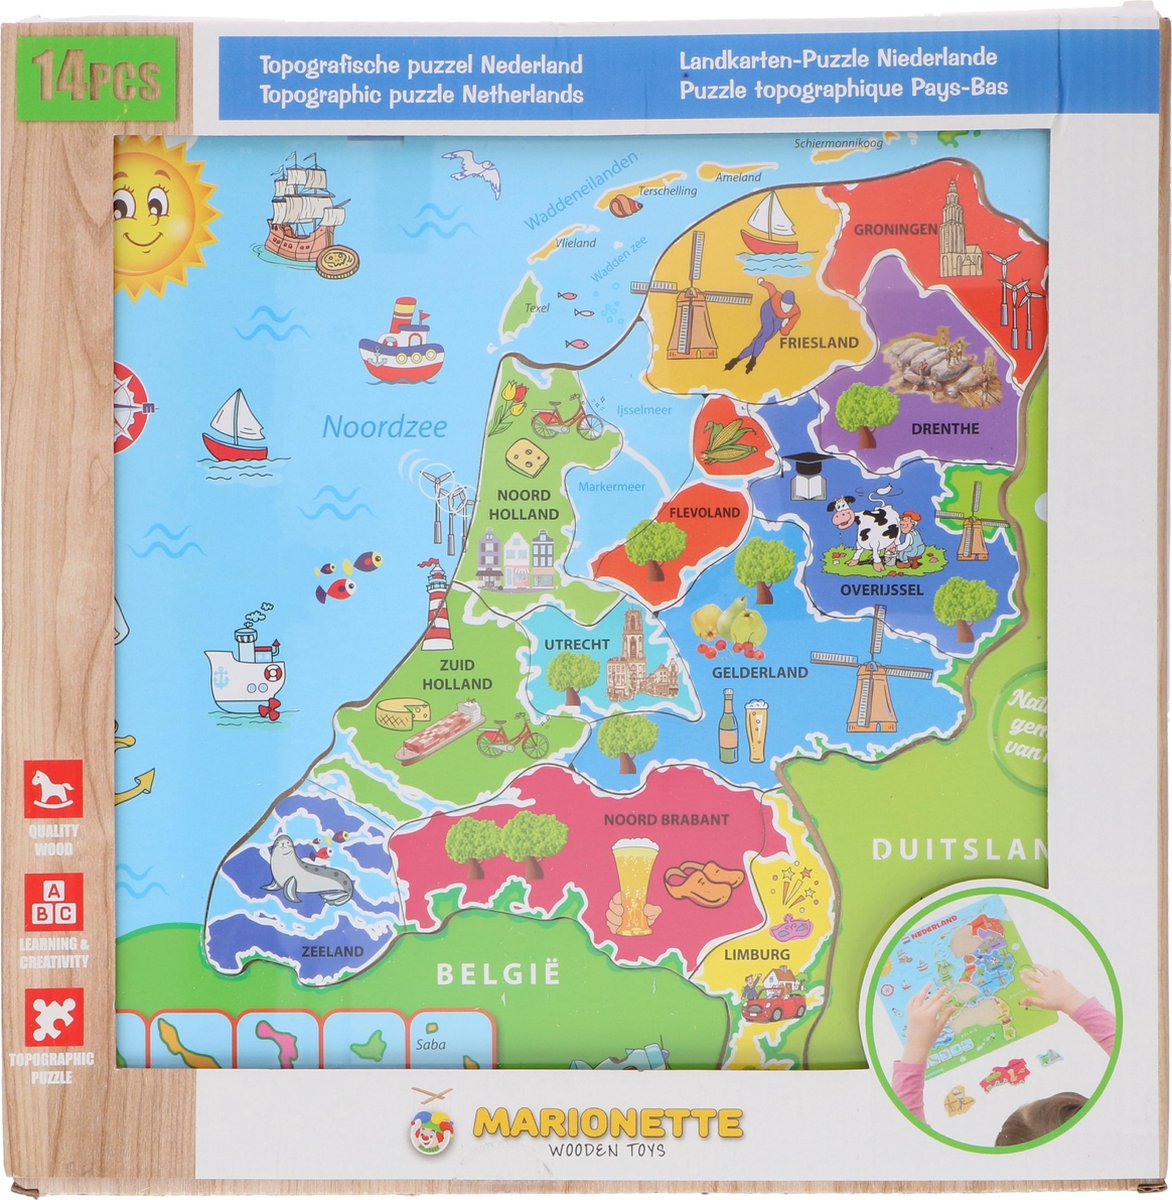   speelgoed puzzel Nederland